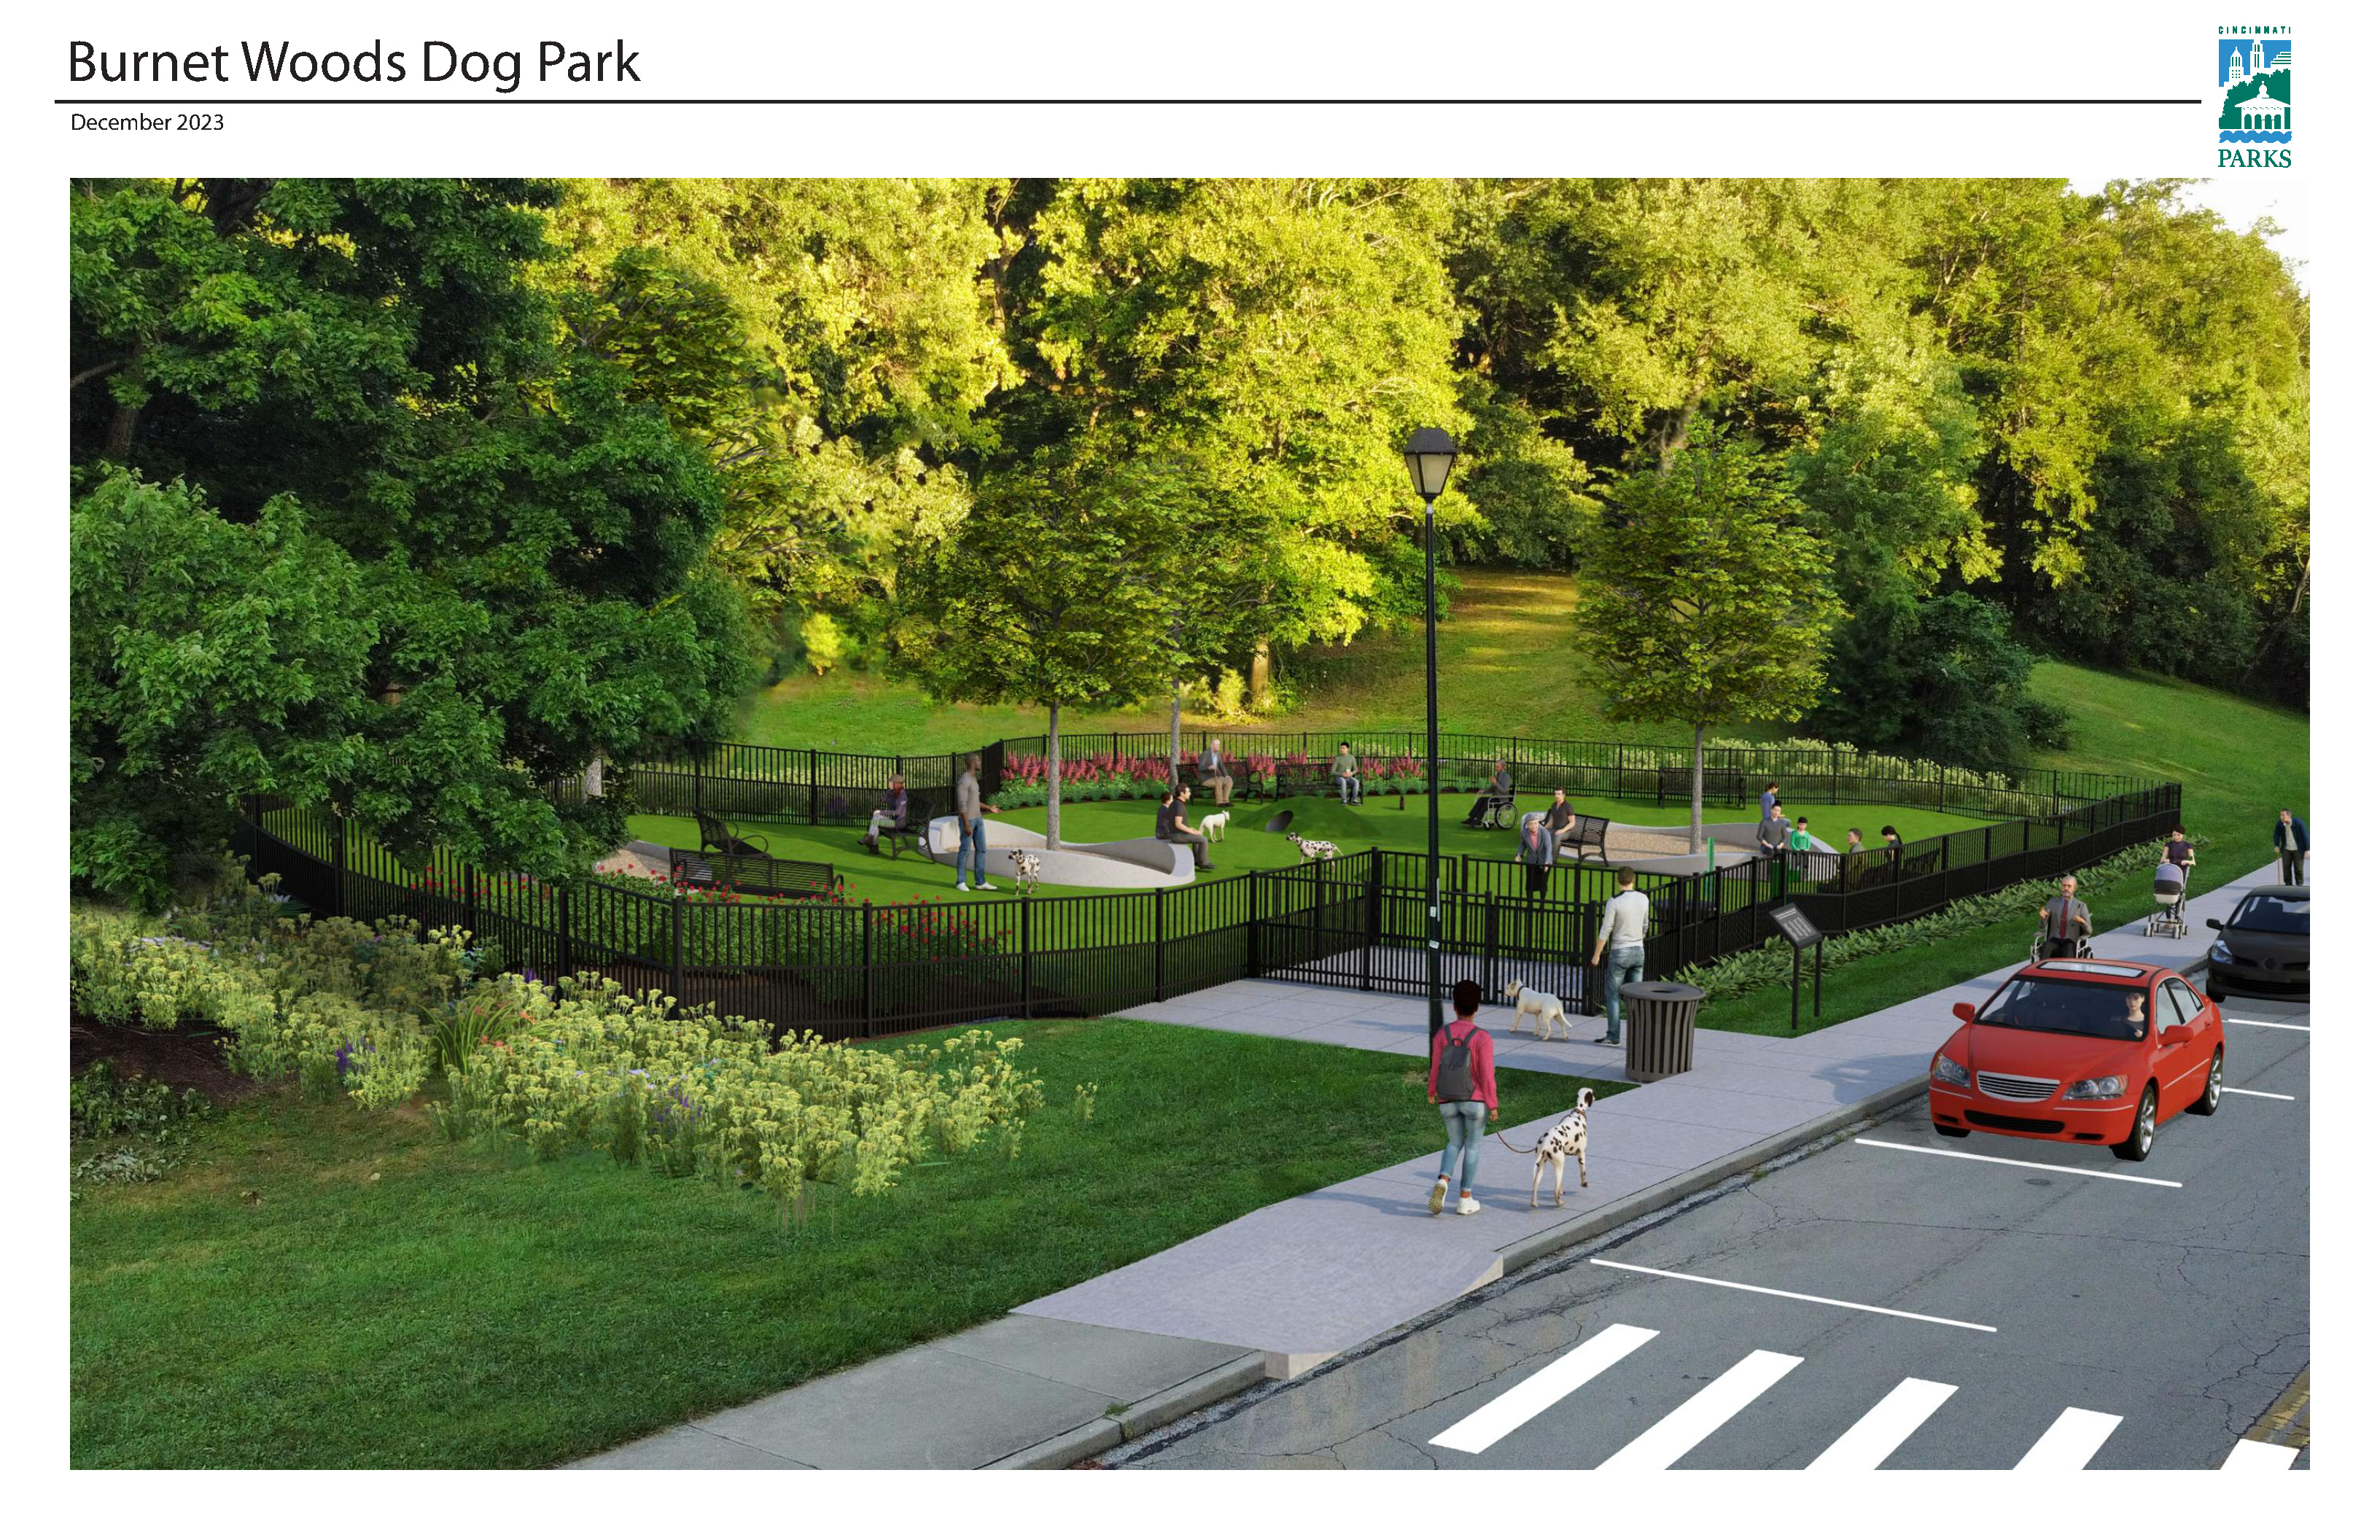 Illustrative rendering of the Burnet Woods Dog Park